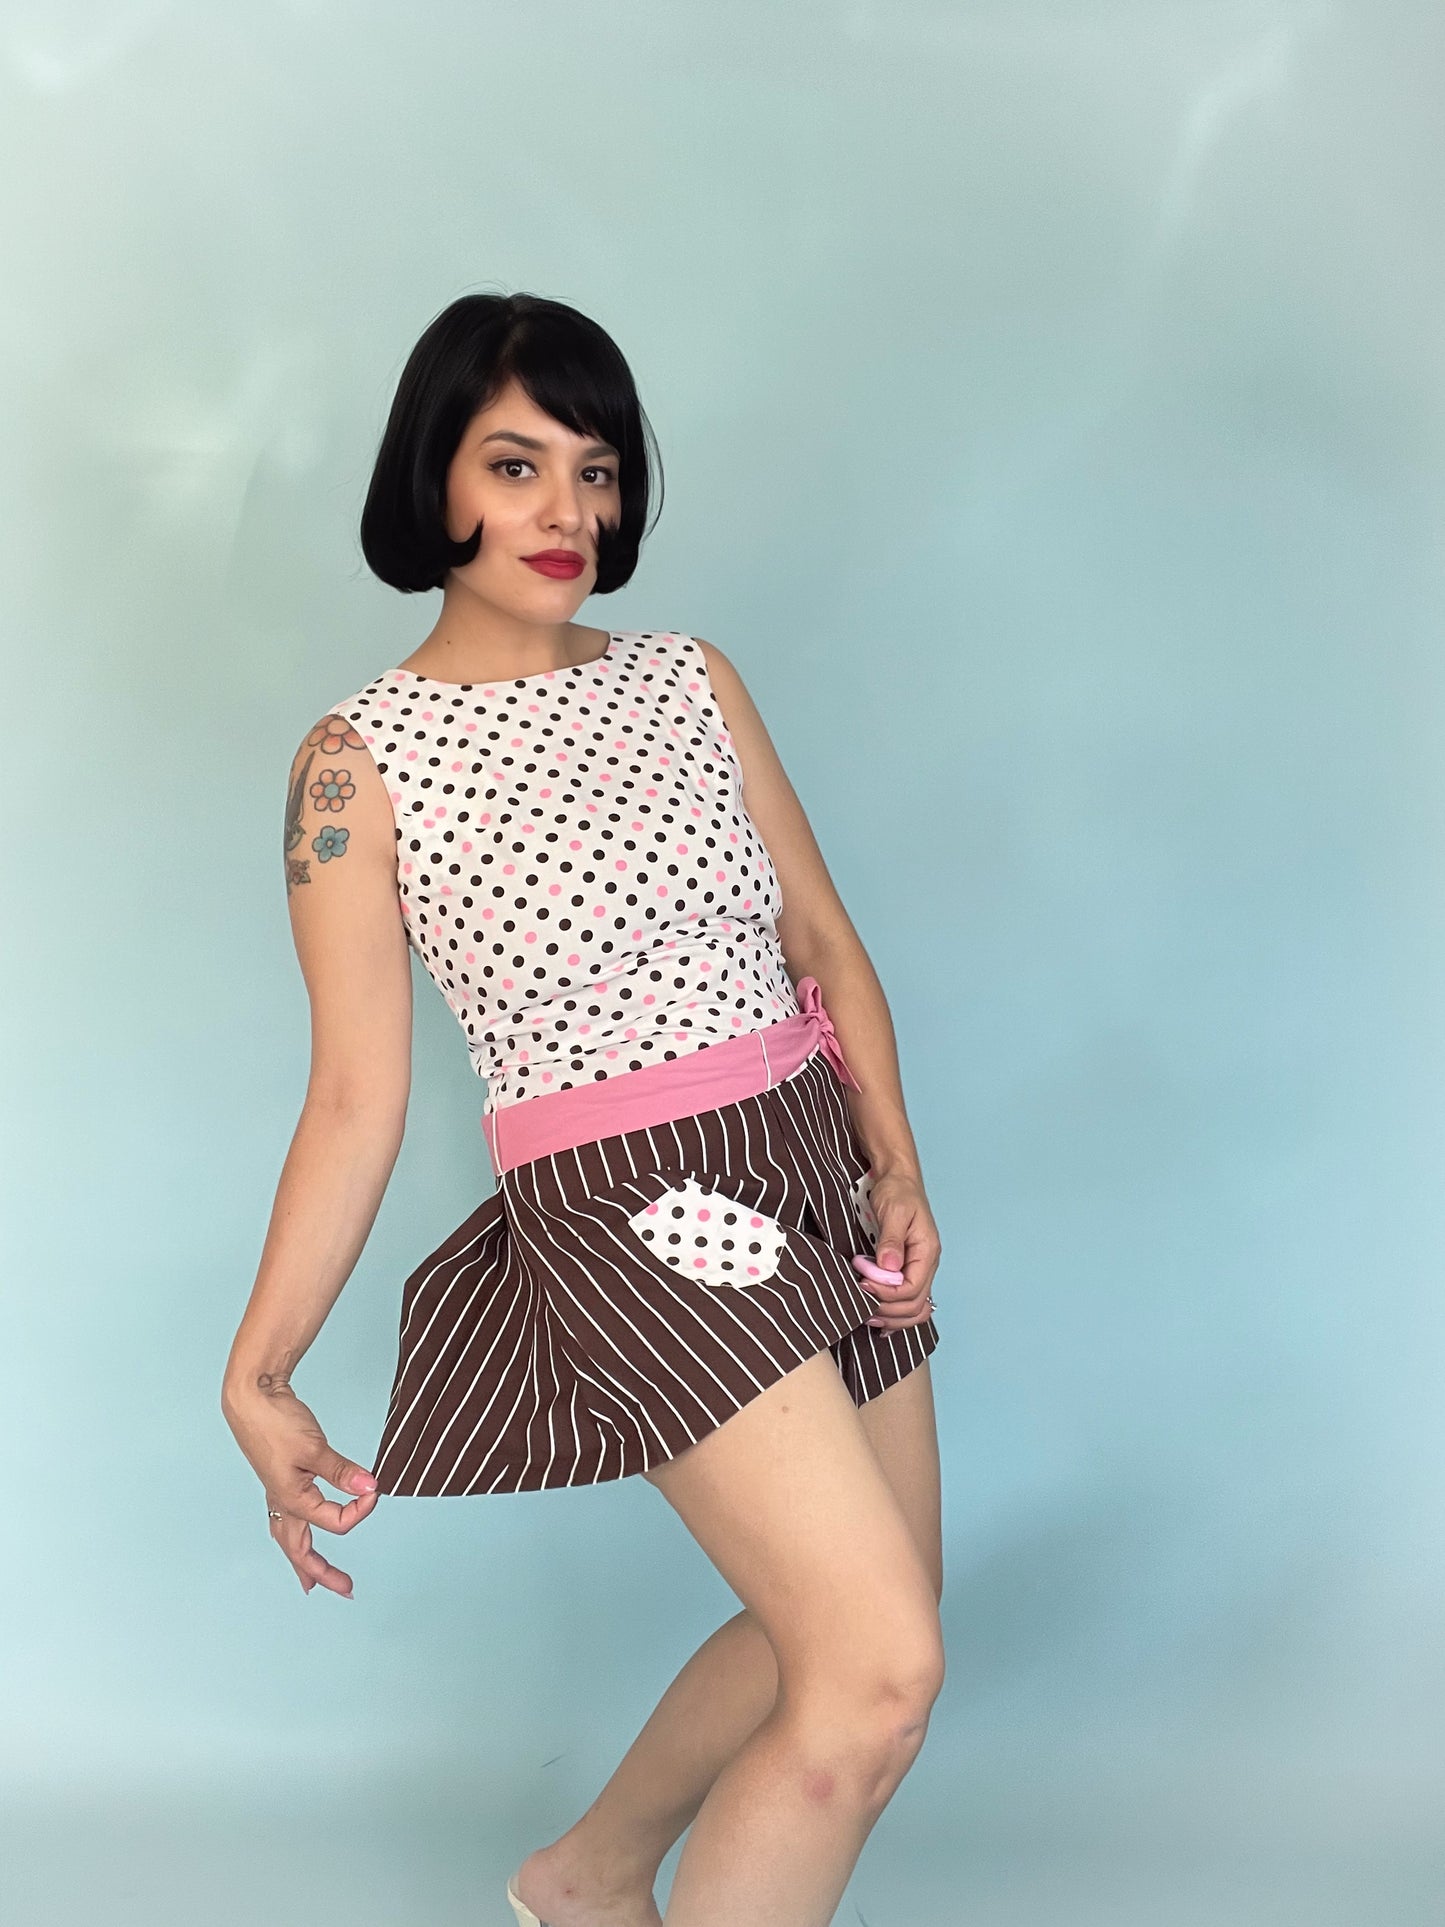 Vintage 60s / 70s Mod Polka Dot and Striped Romper Fits Sizes XXS-XS